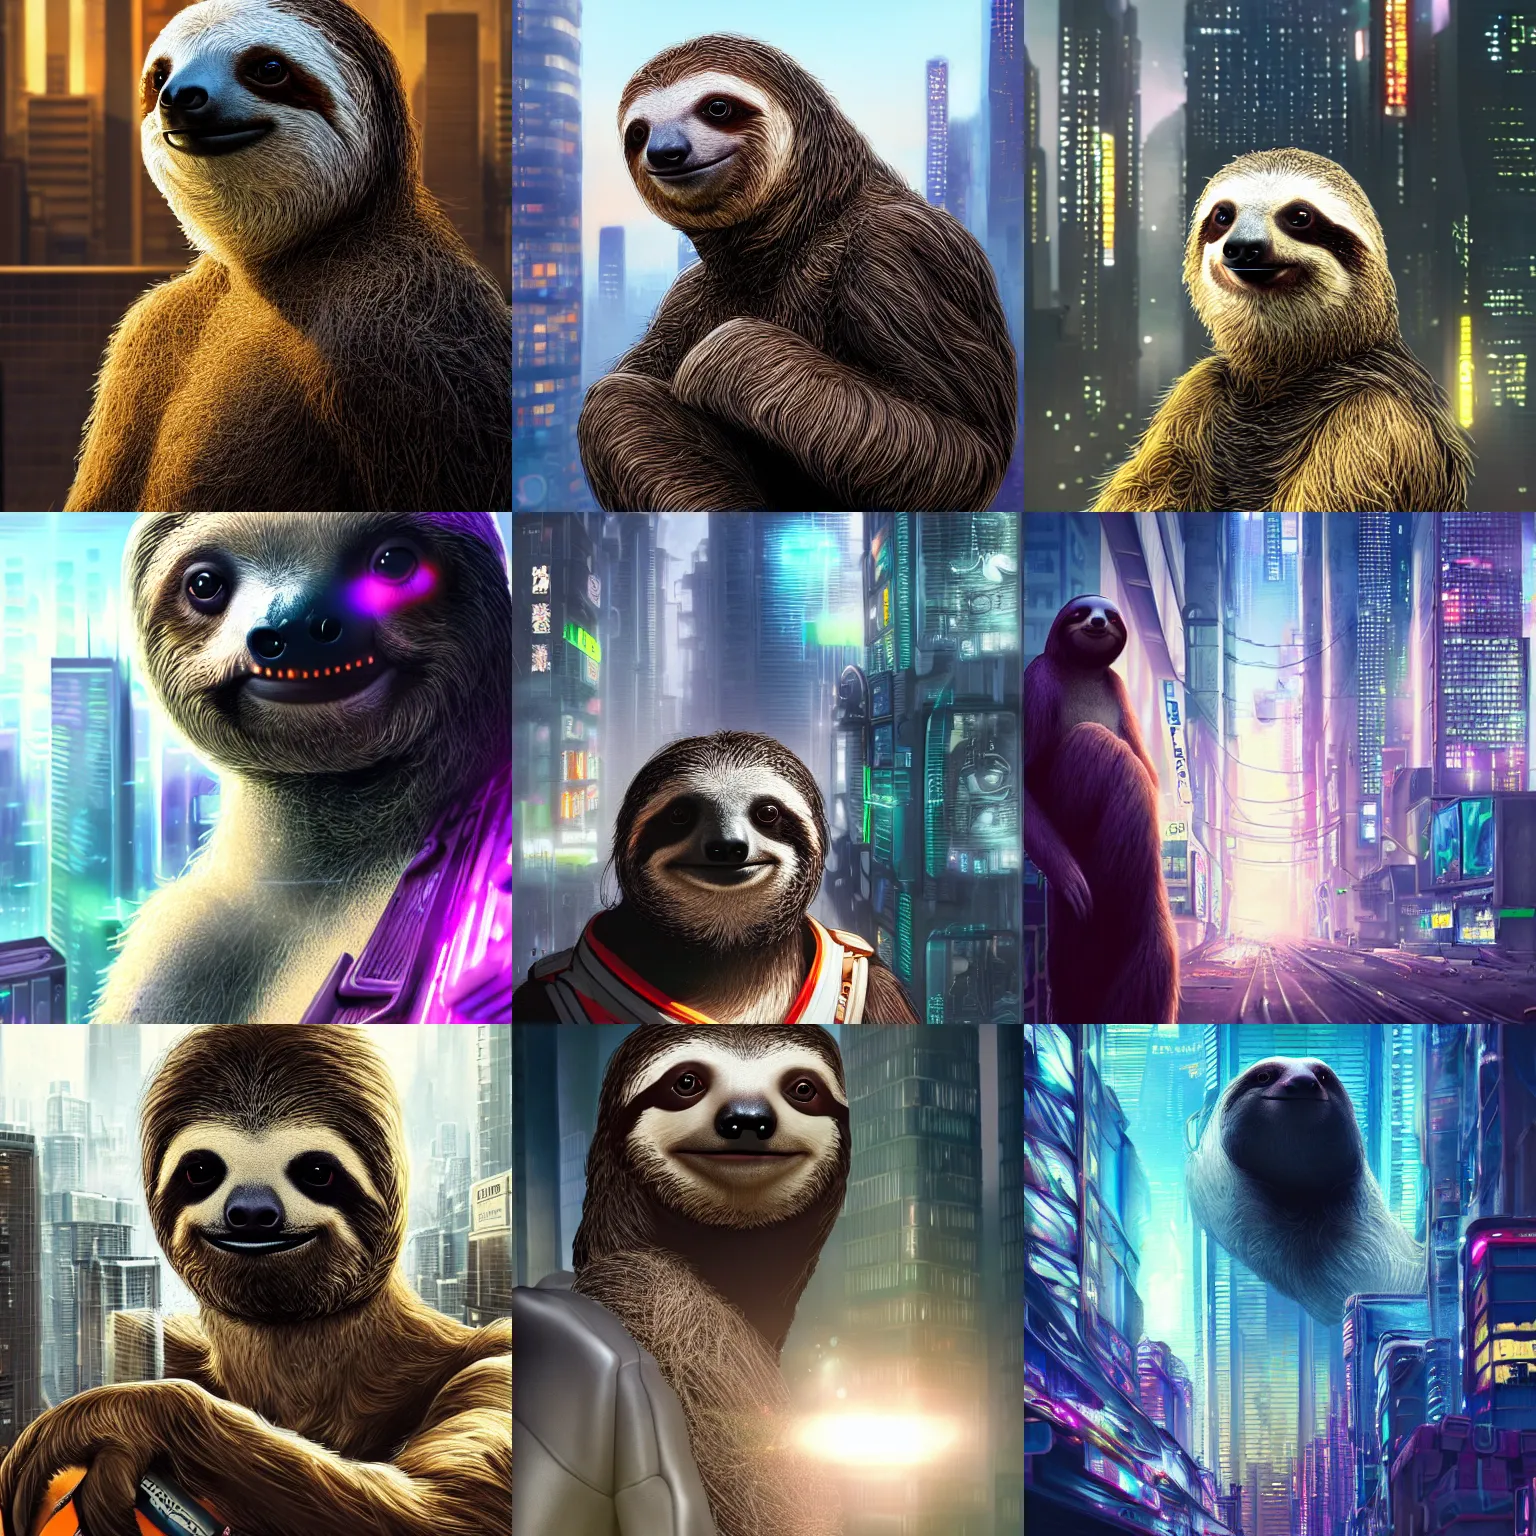 Prompt: a beautiful portrait render of a sloth in a cyberpunk city, trending on ArtStation